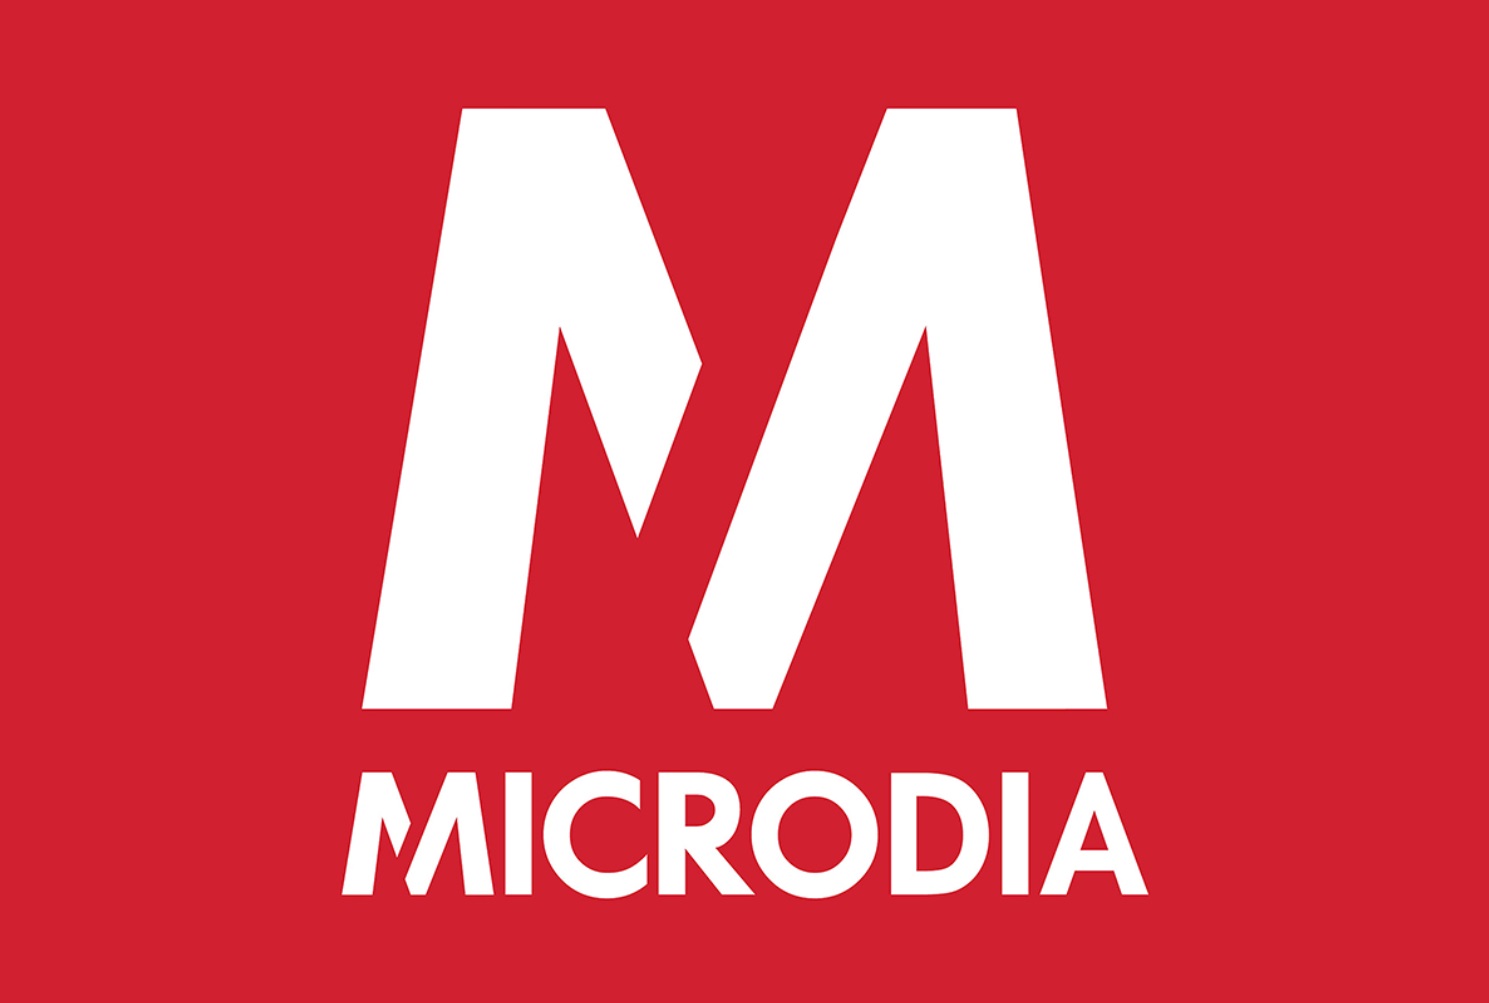 MICRODIA Logo